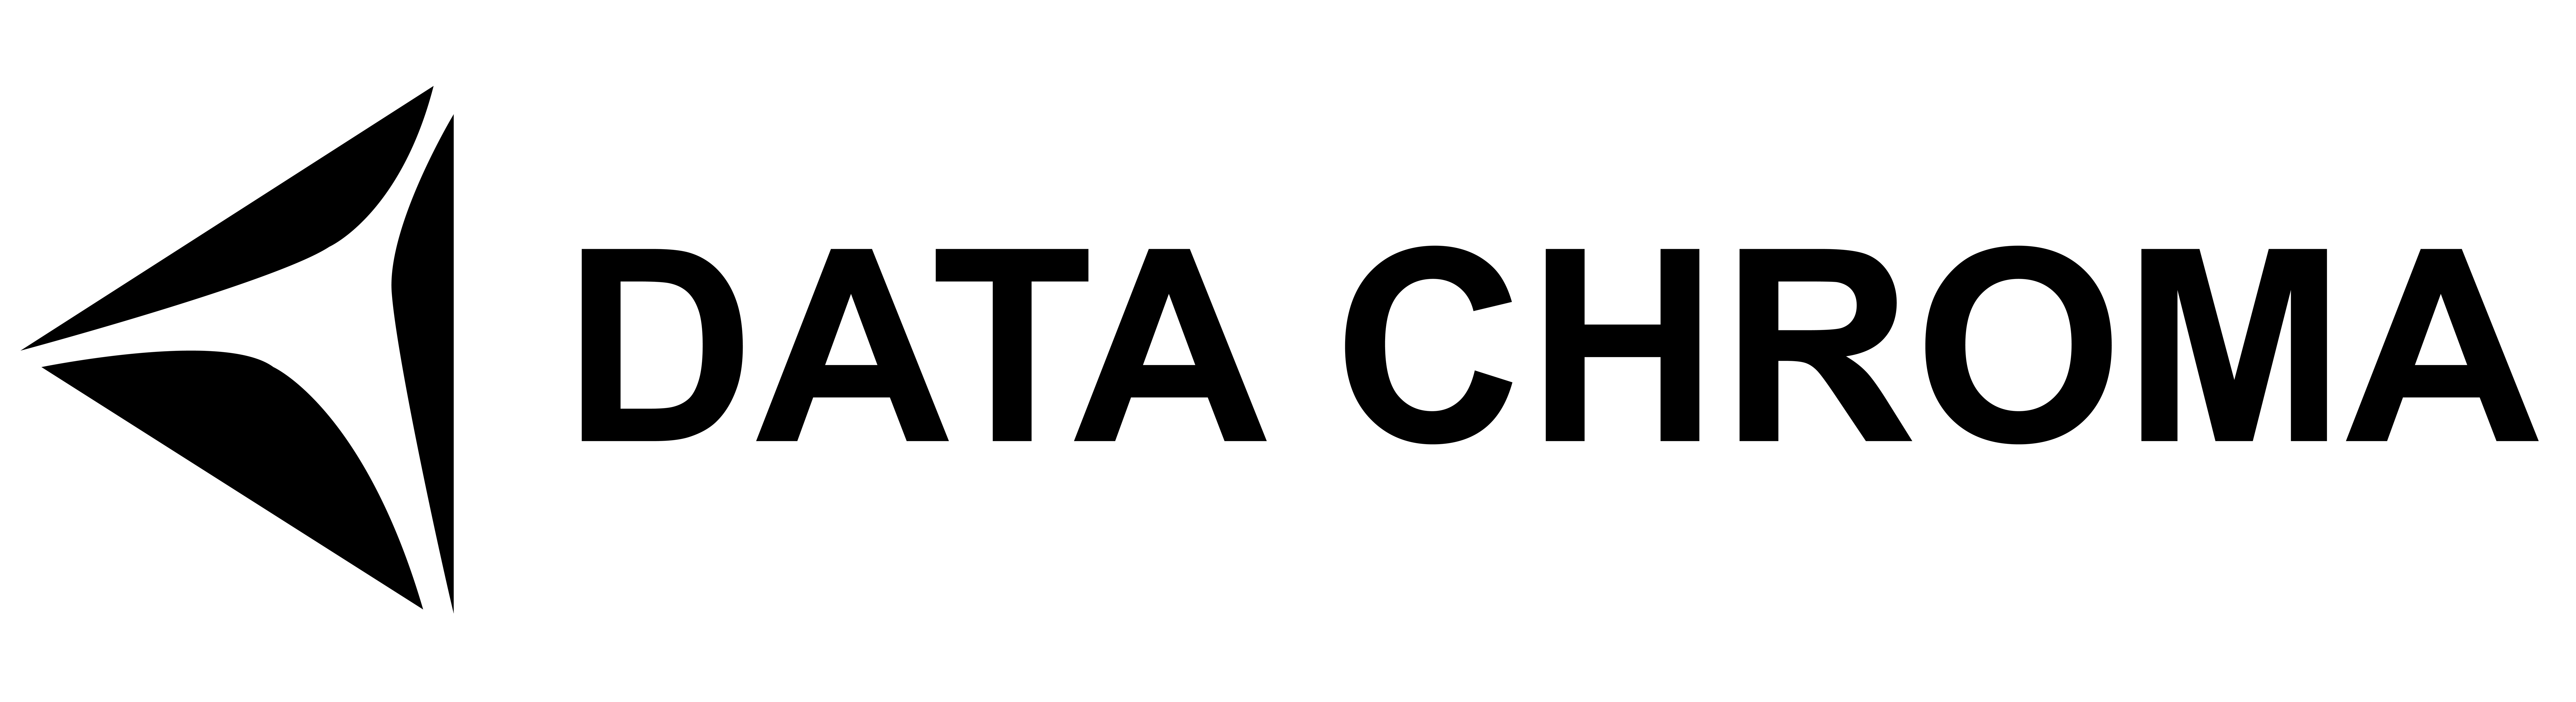 Data Chroma Logo